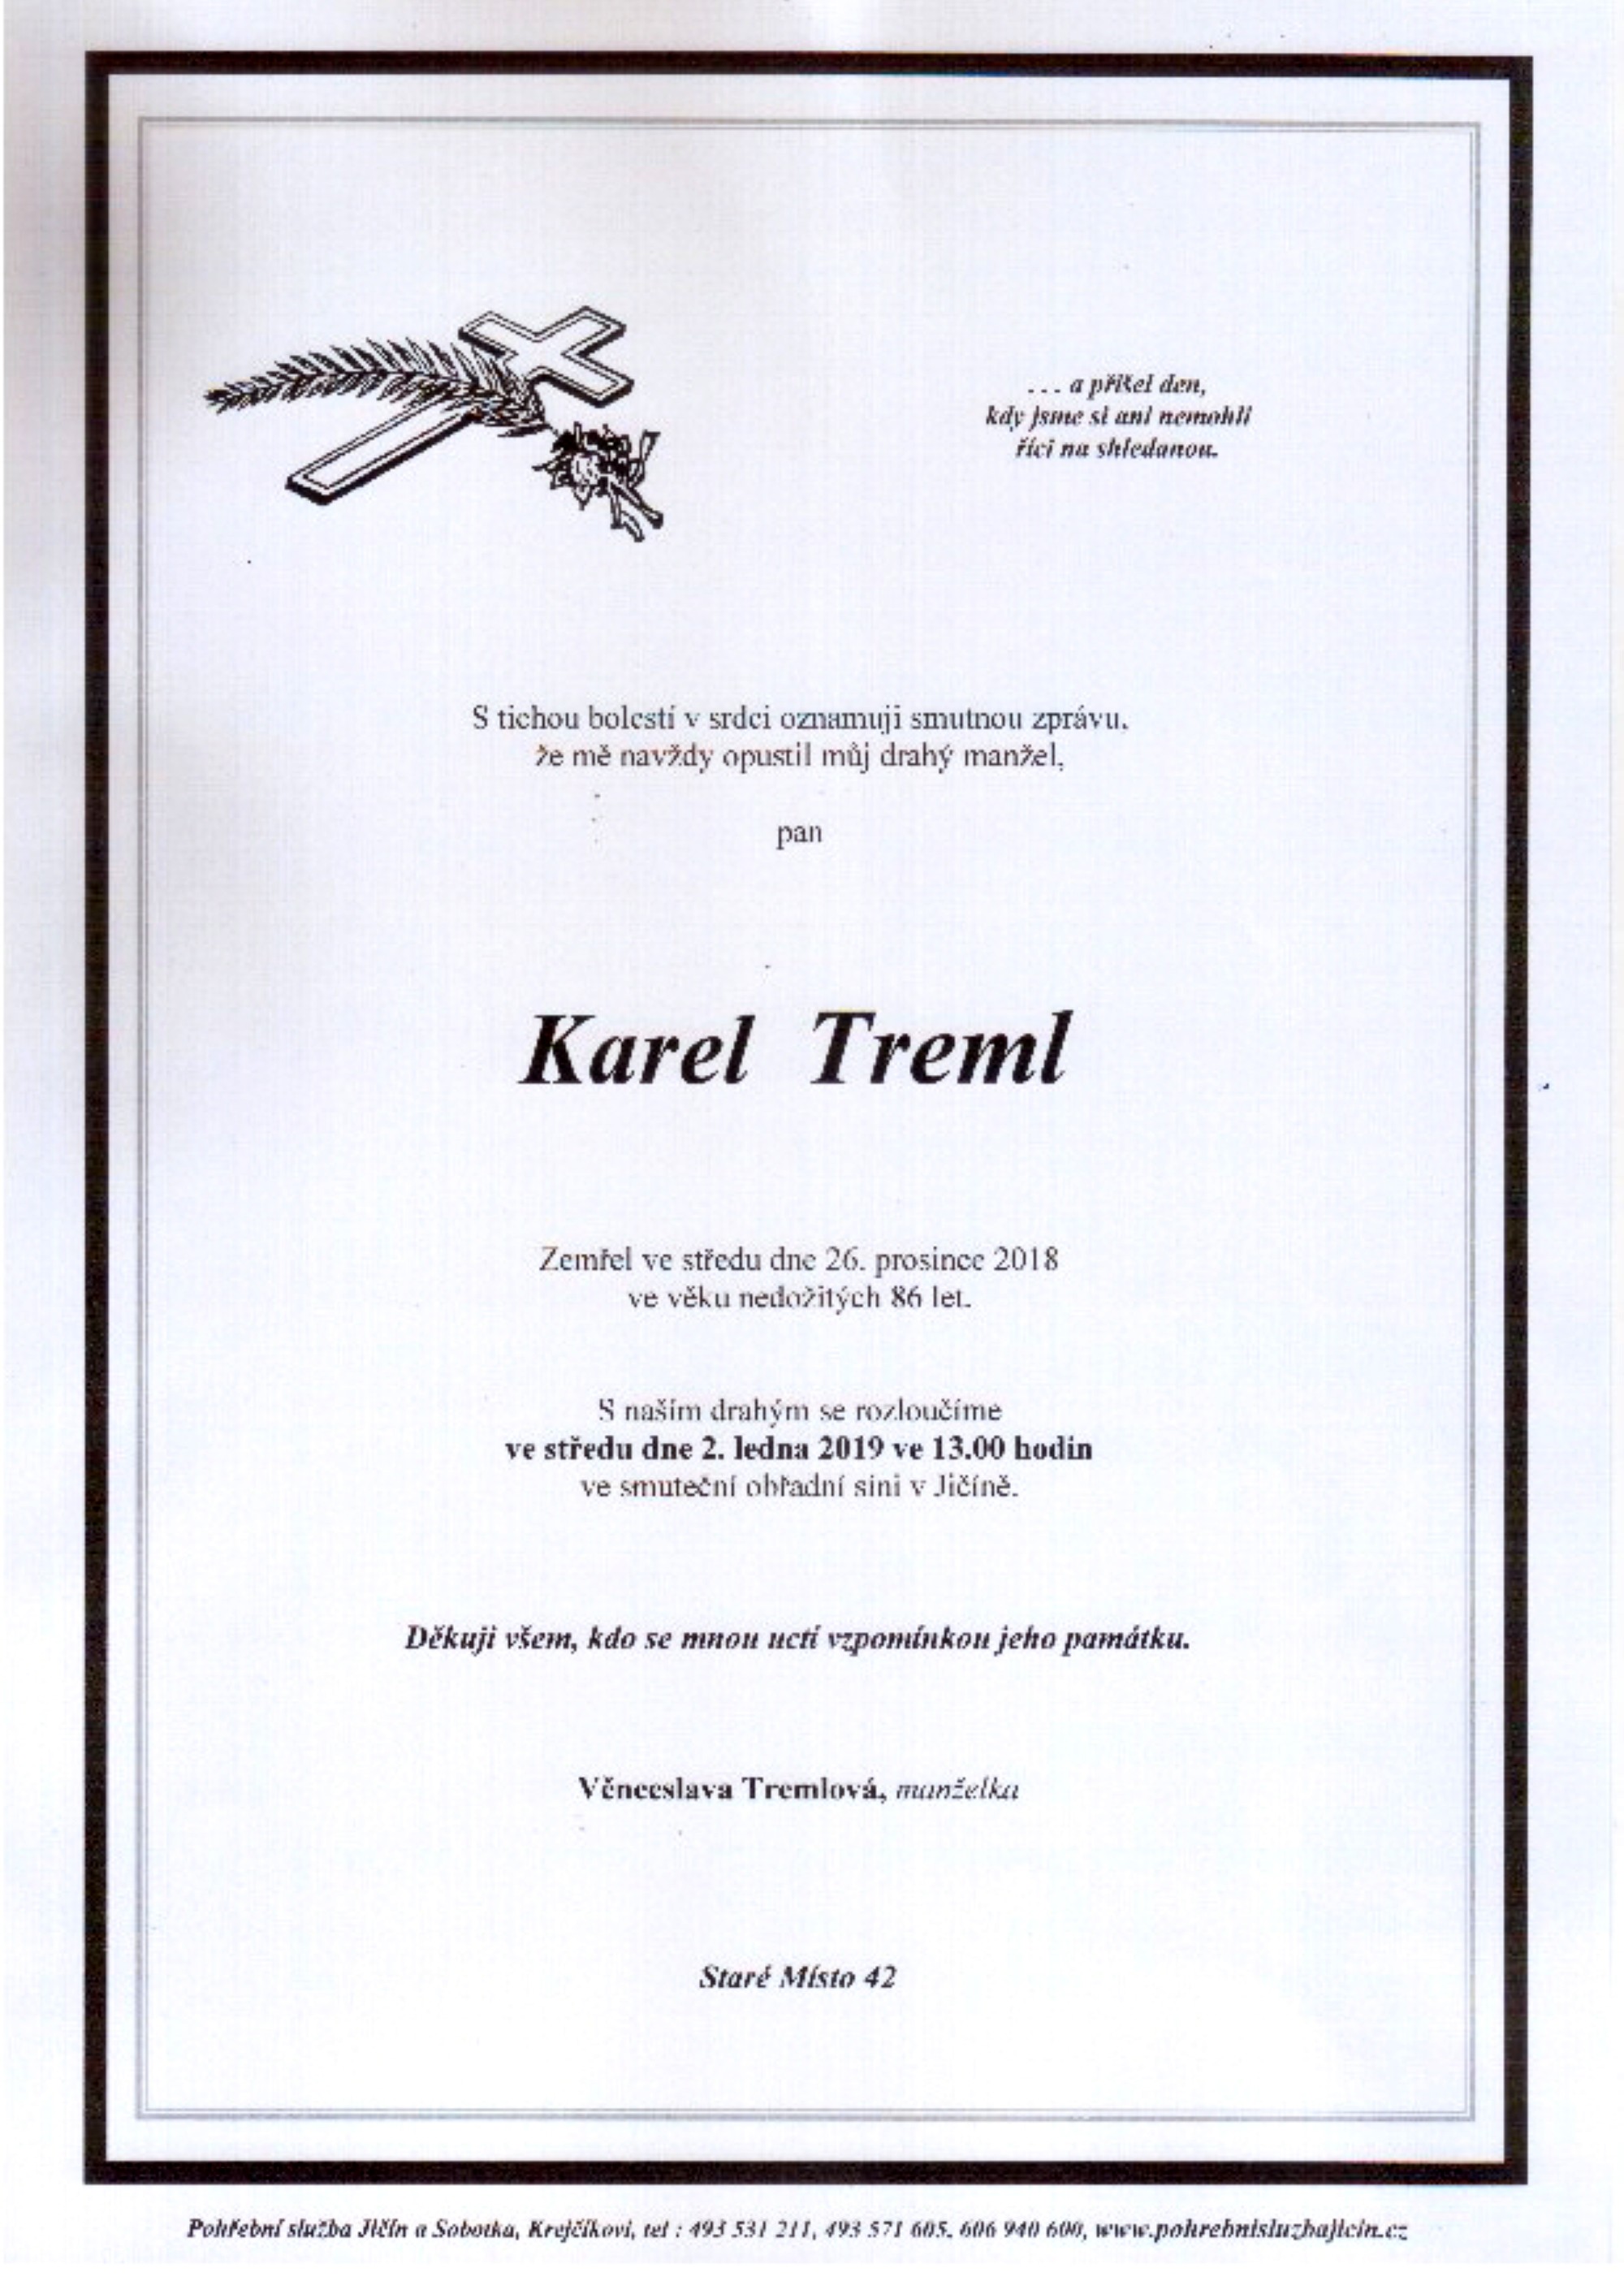 Karel Treml